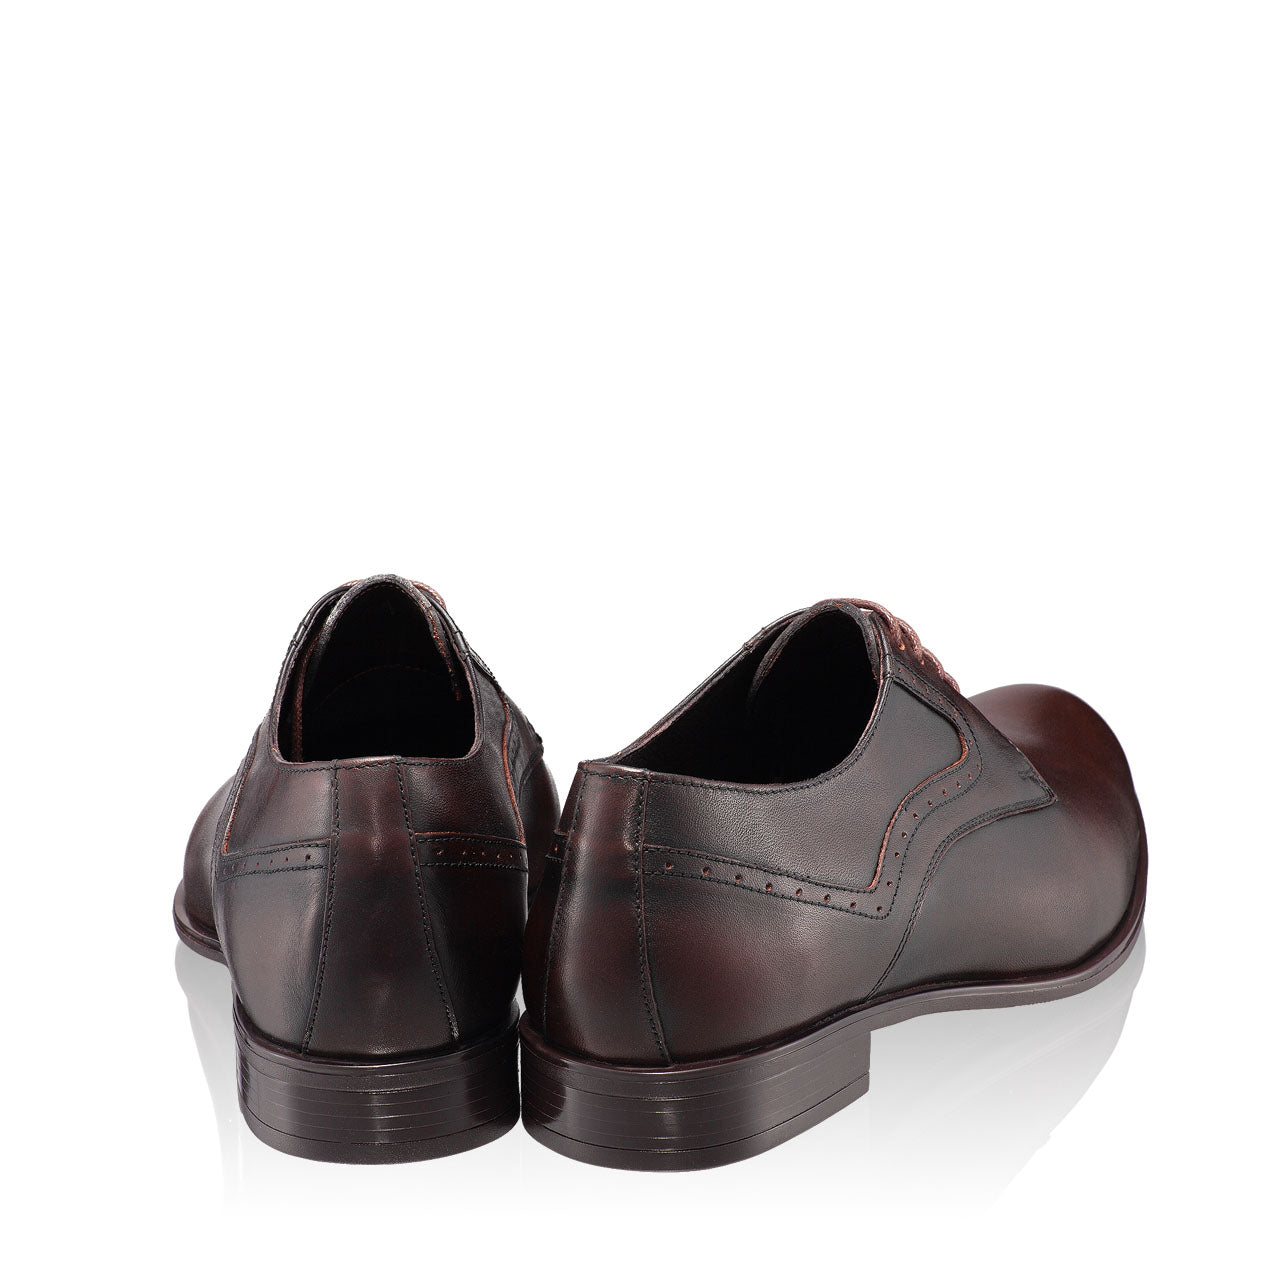 Pantofi eleganti barbati Classic maro inchis